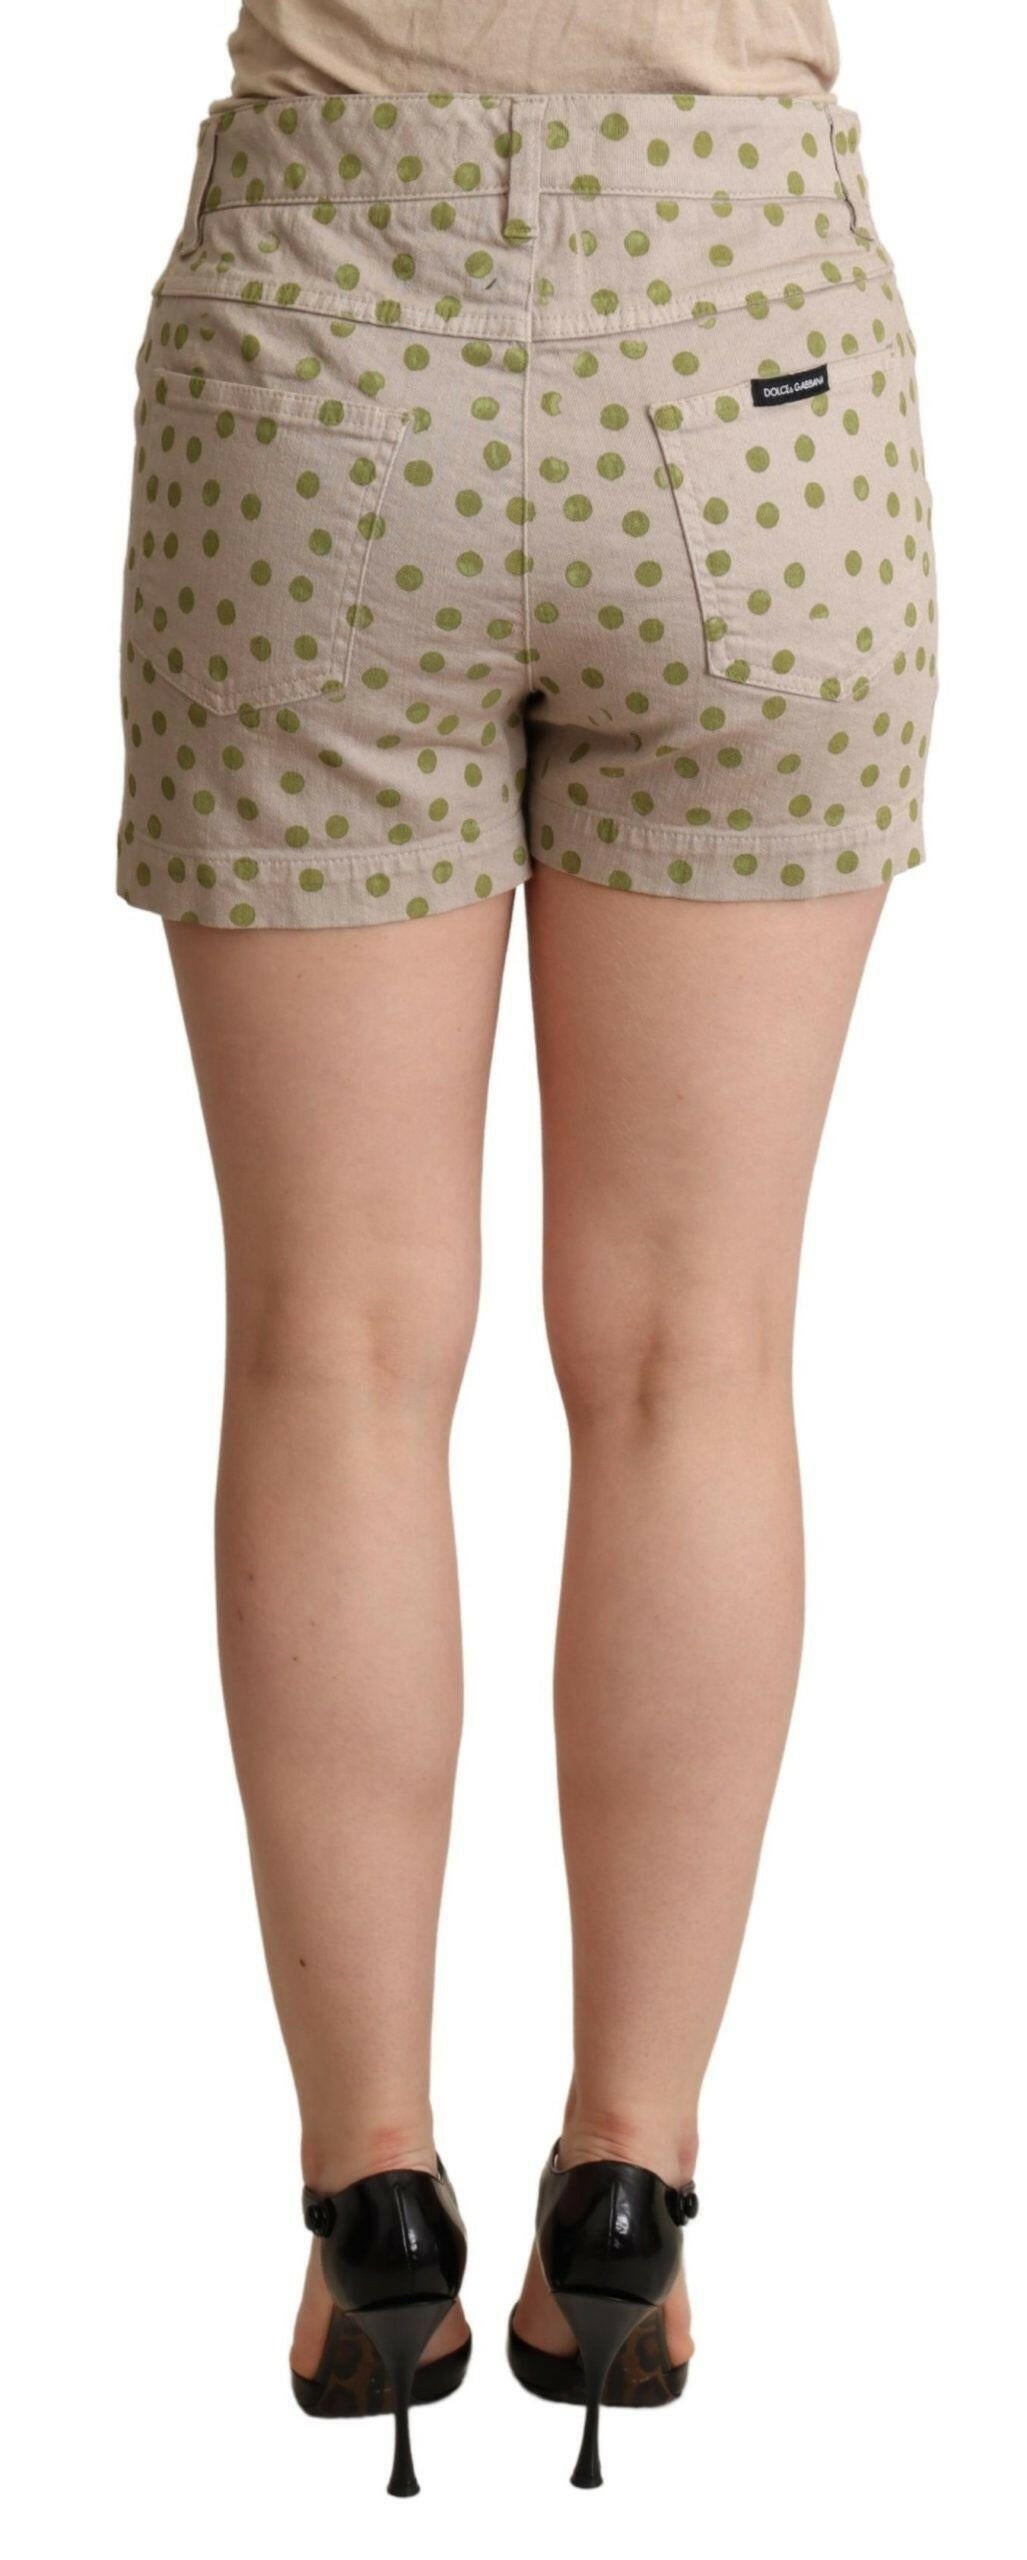 Dolce & Gabbana Beige Polka Dots Denim Cotton Stretch Shorts - GENUINE AUTHENTIC BRAND LLC  